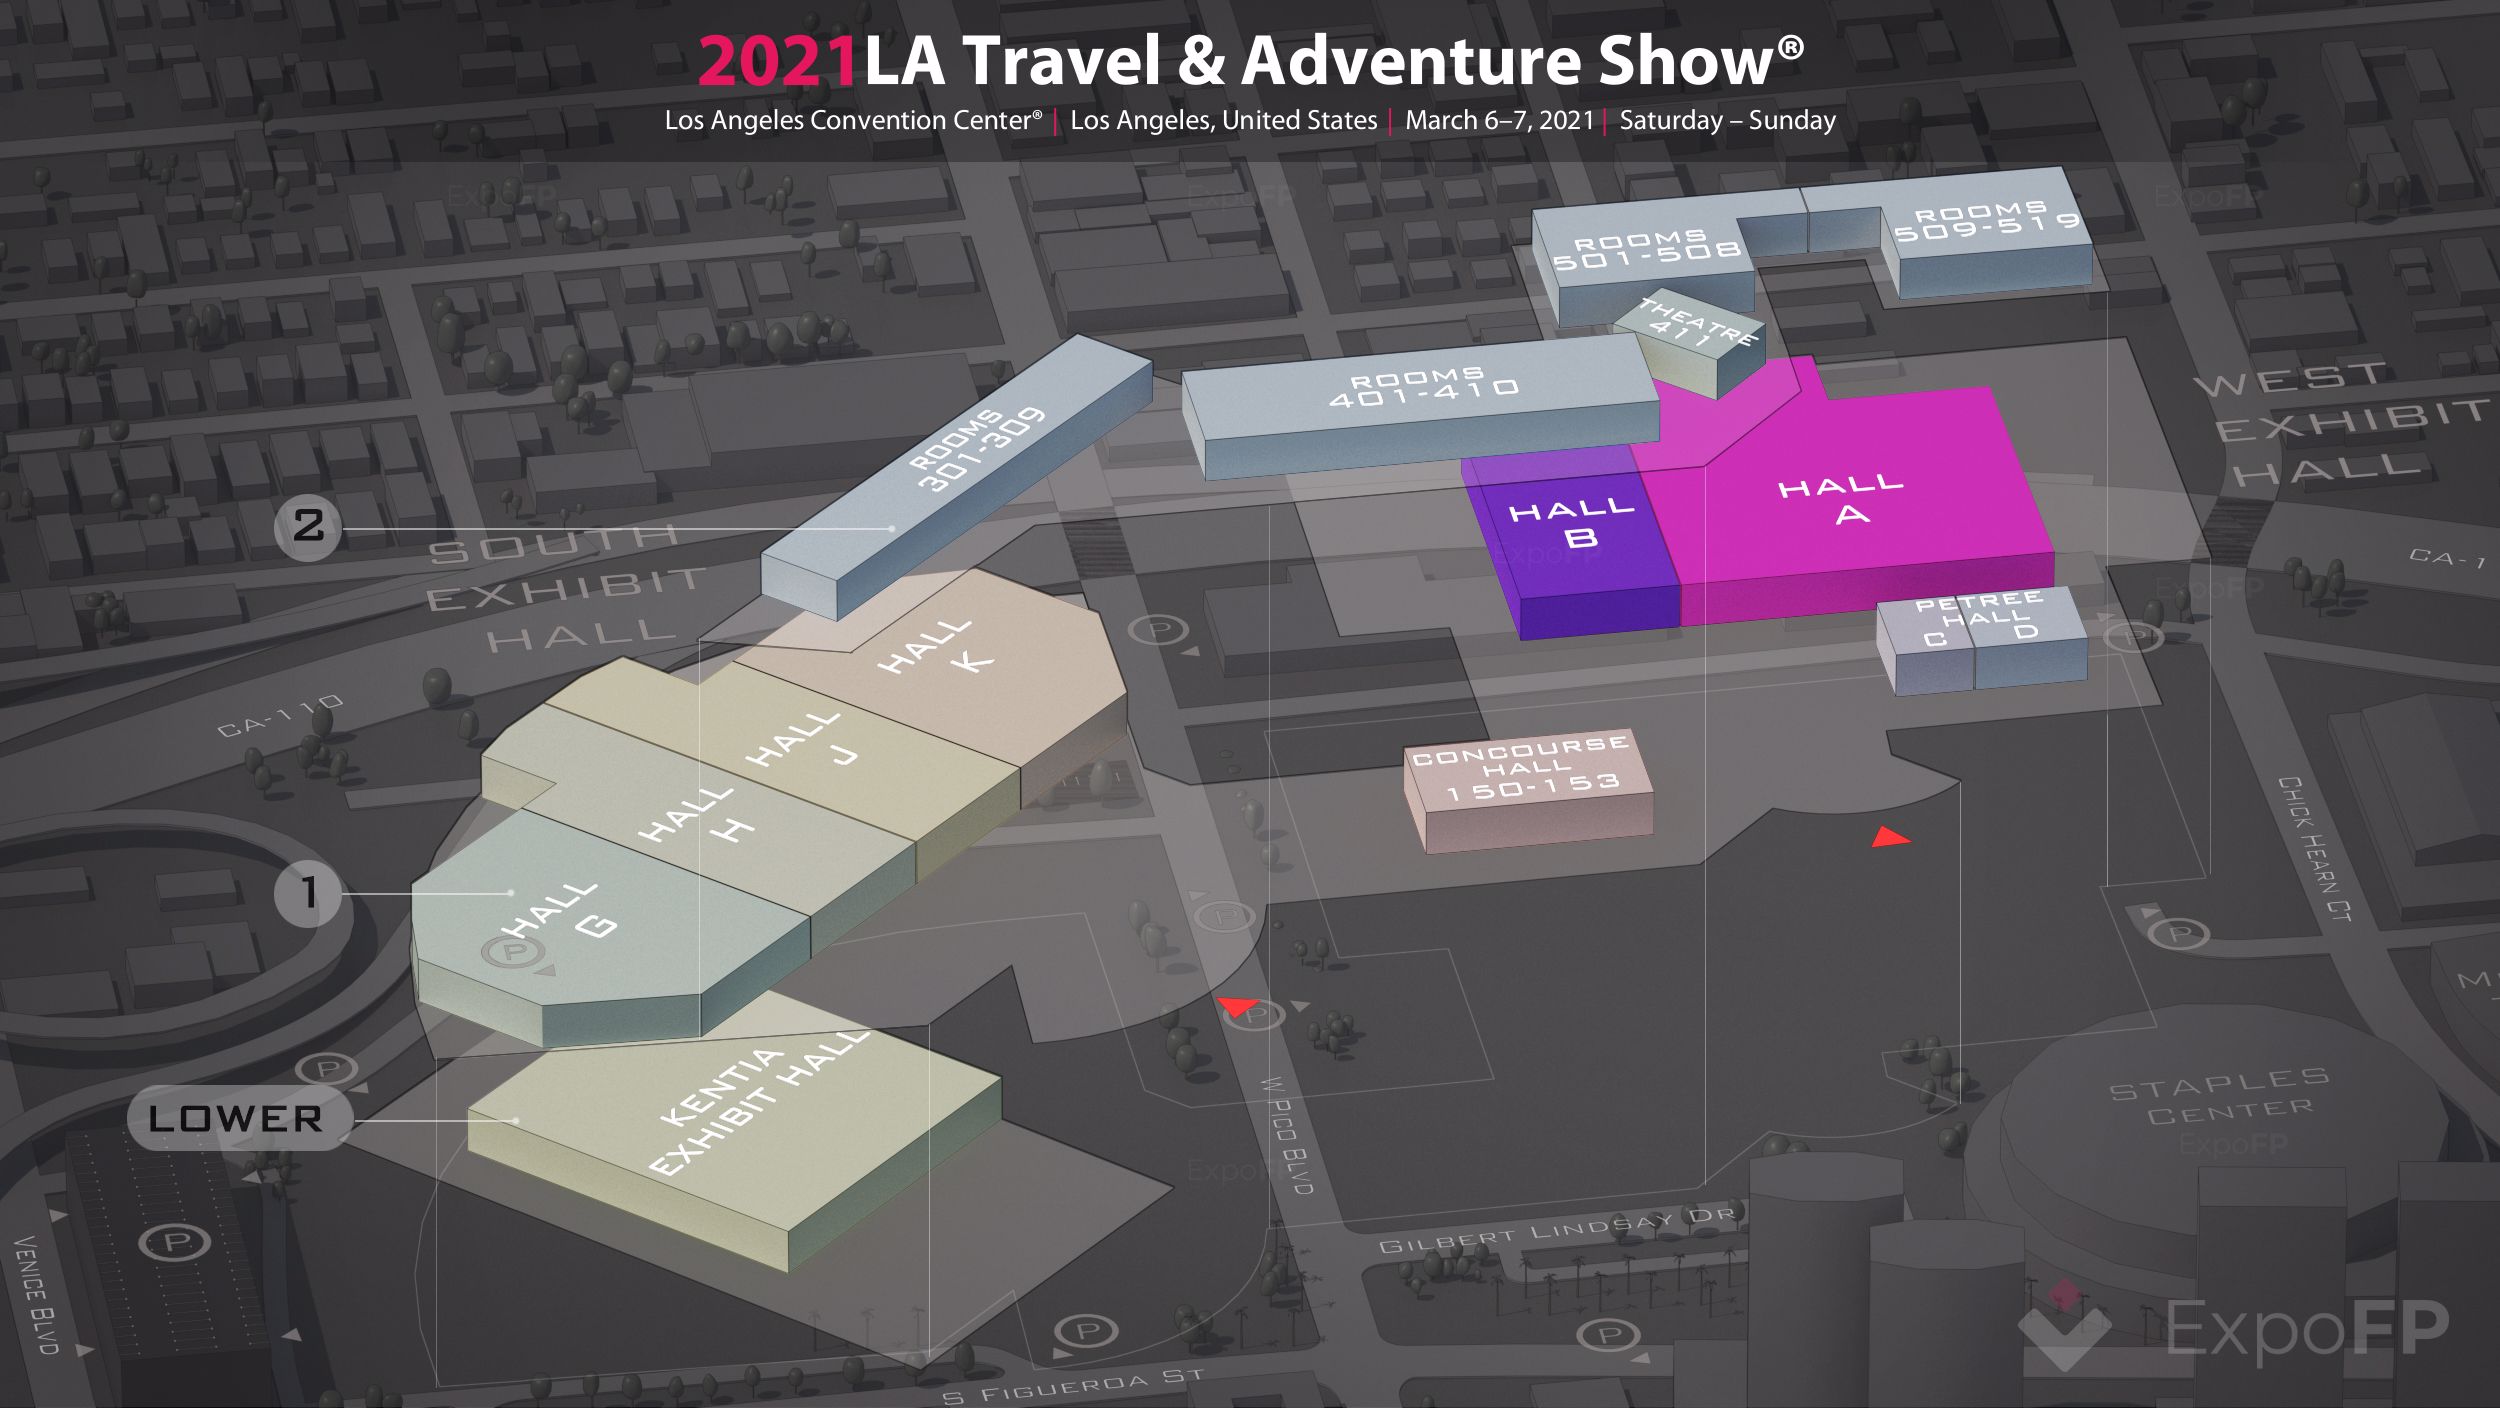 LA Travel & Adventure Show 2021 in Los Angeles Convention Center